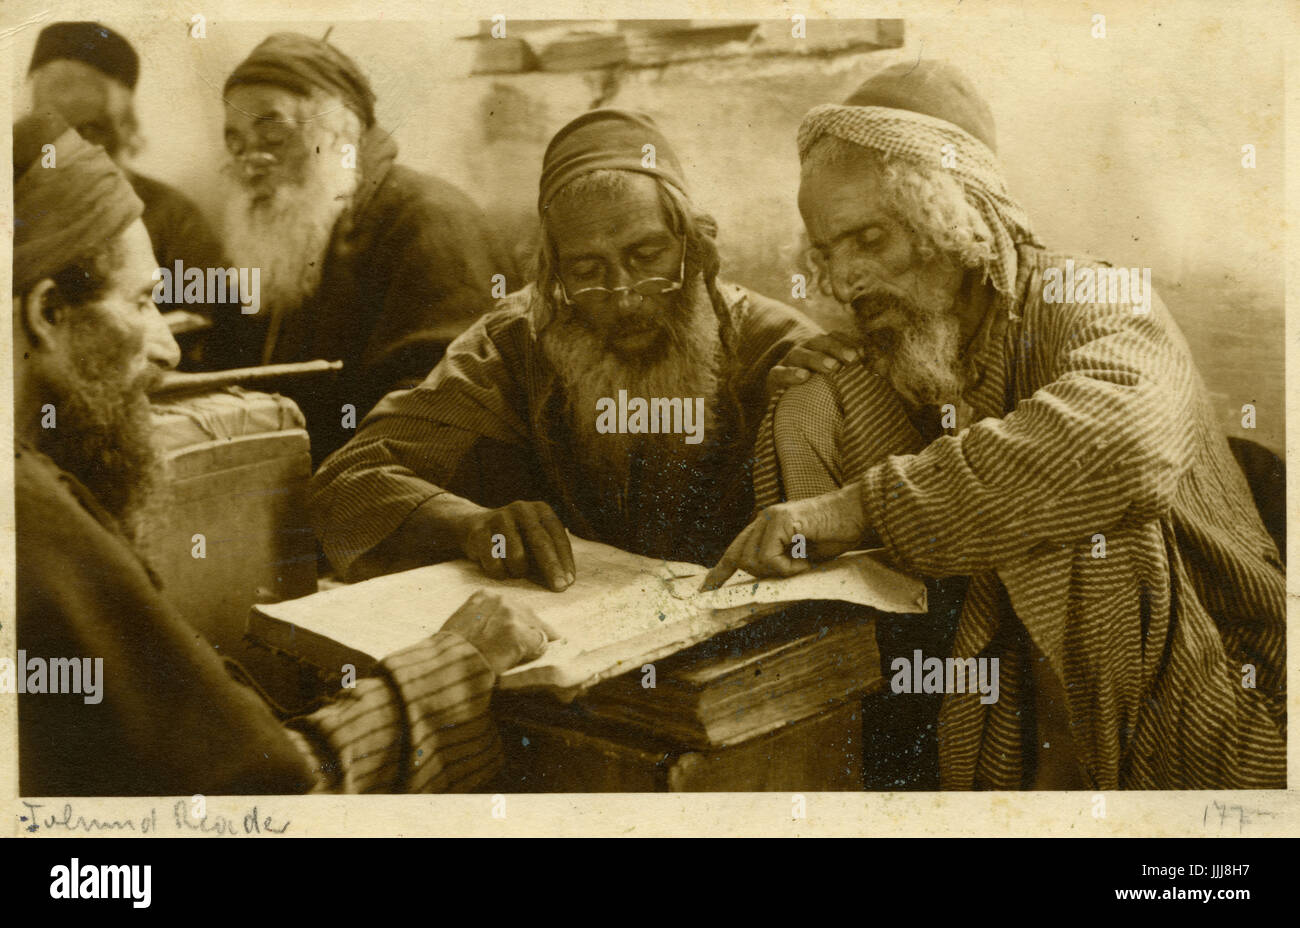 Yemenite studiando gli uomini santi testi, Gerusalemme e Palestina c. 1900 Foto Stock